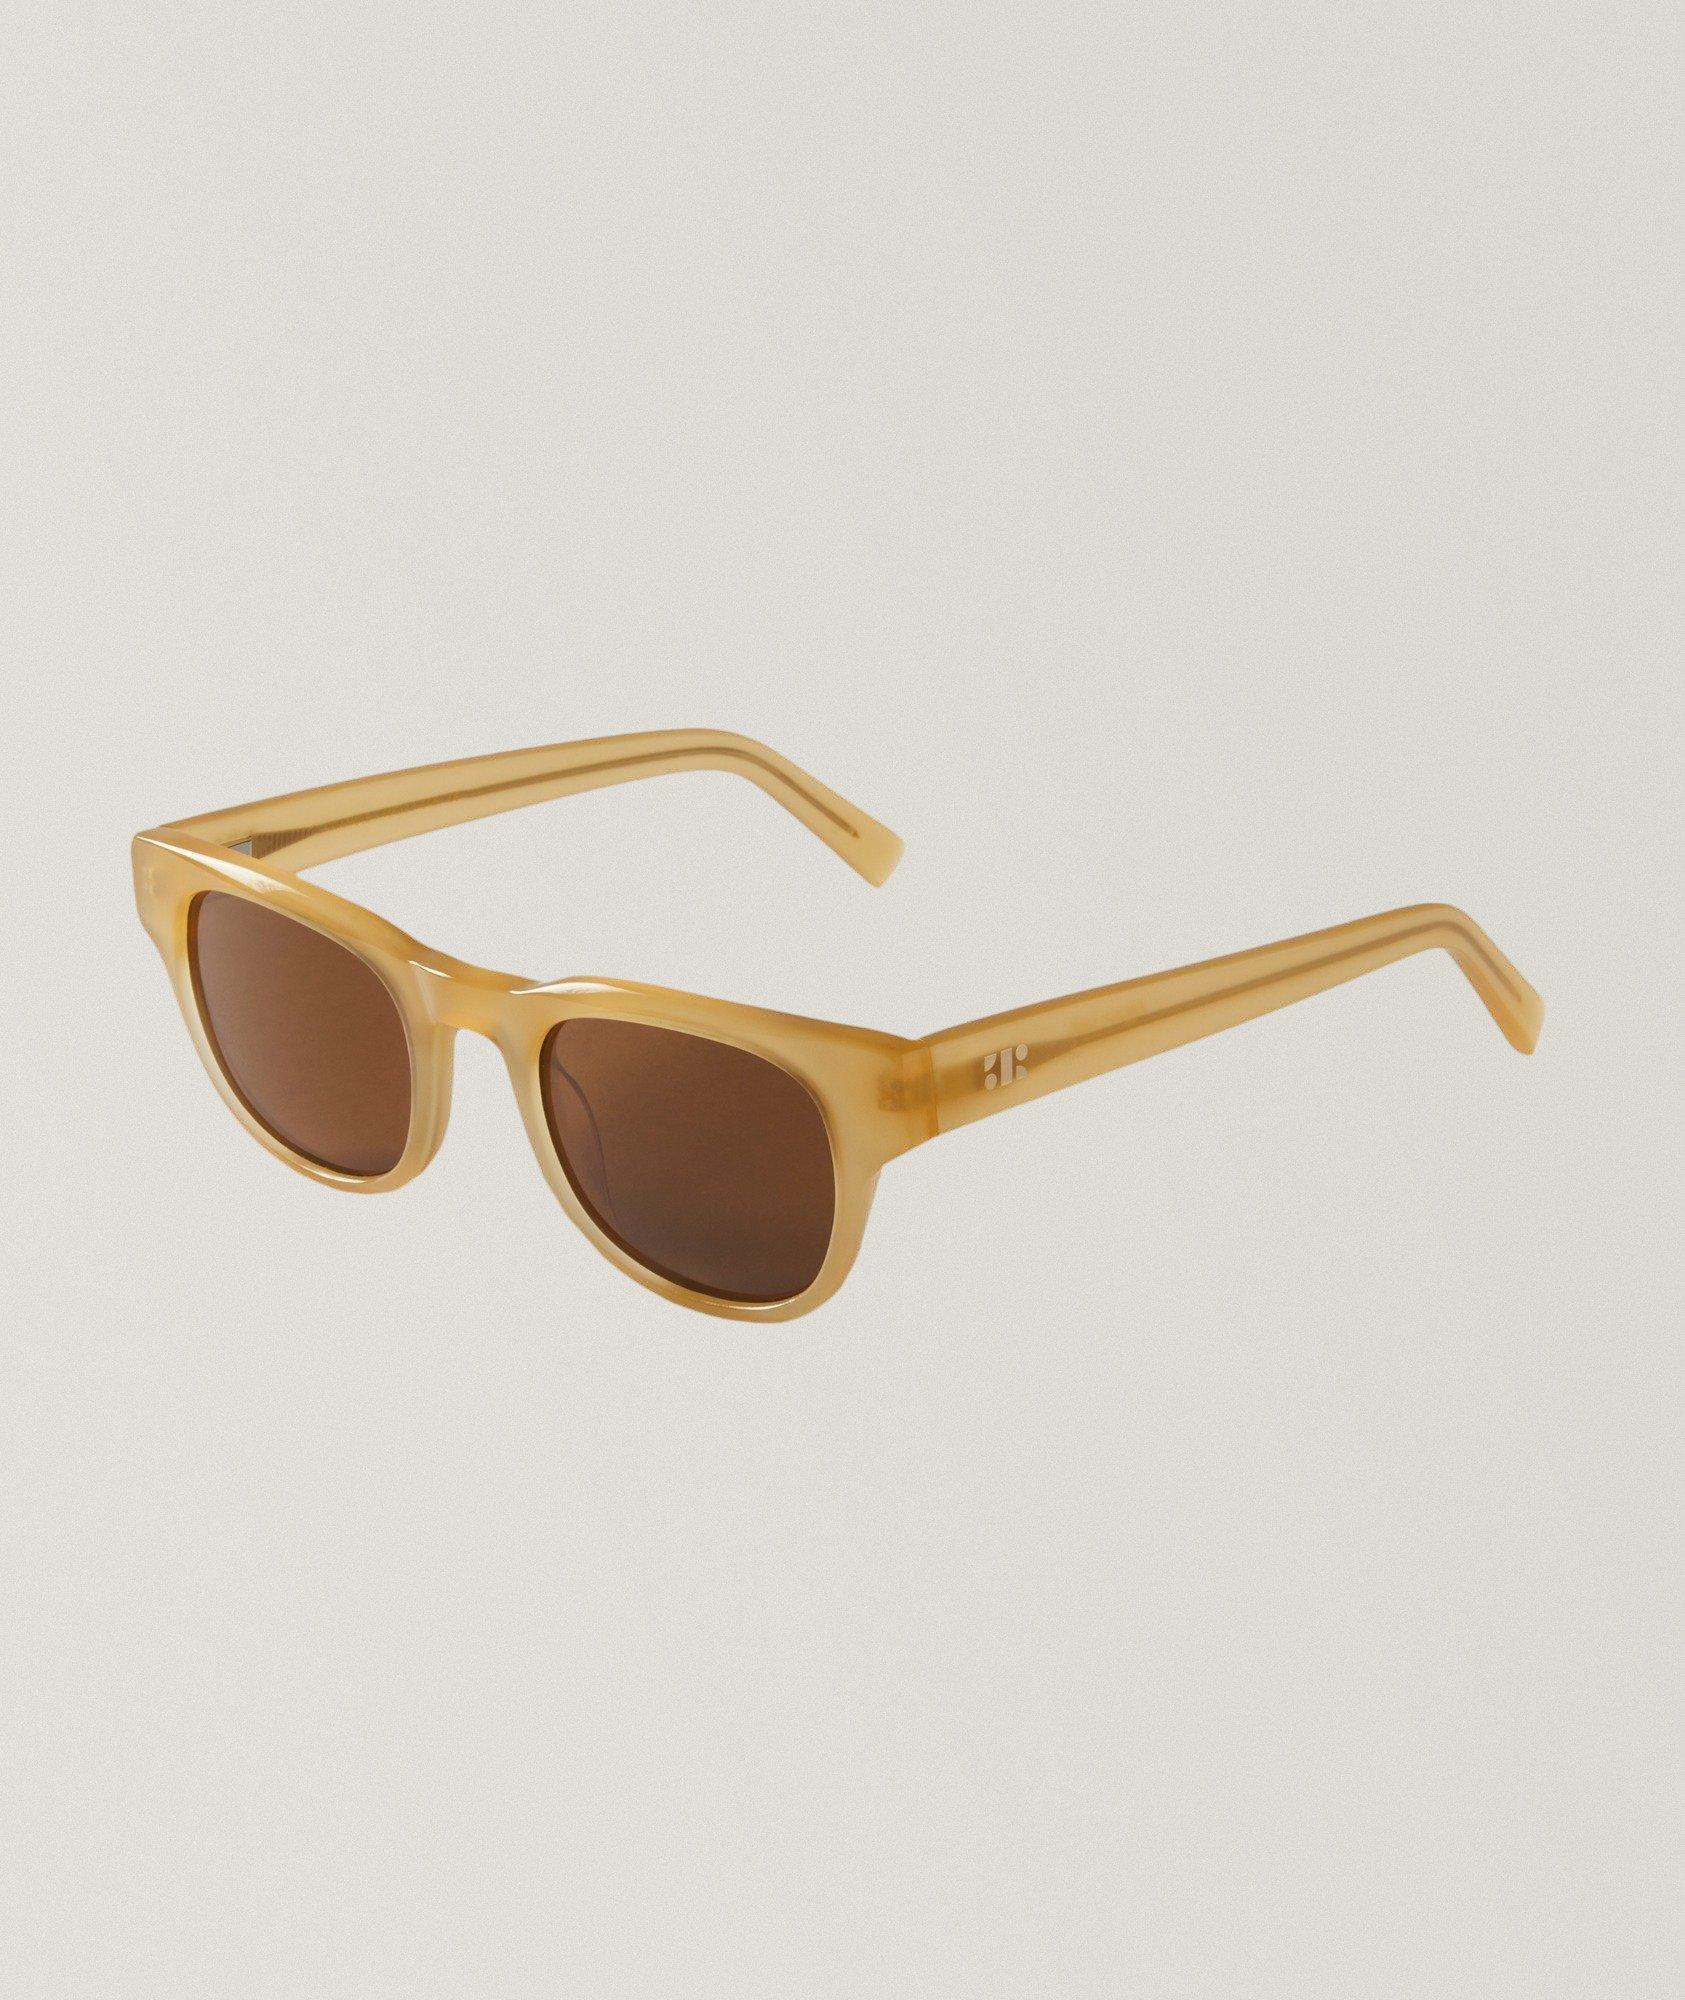 Francis Square Wayfarer Sunglasses image 0